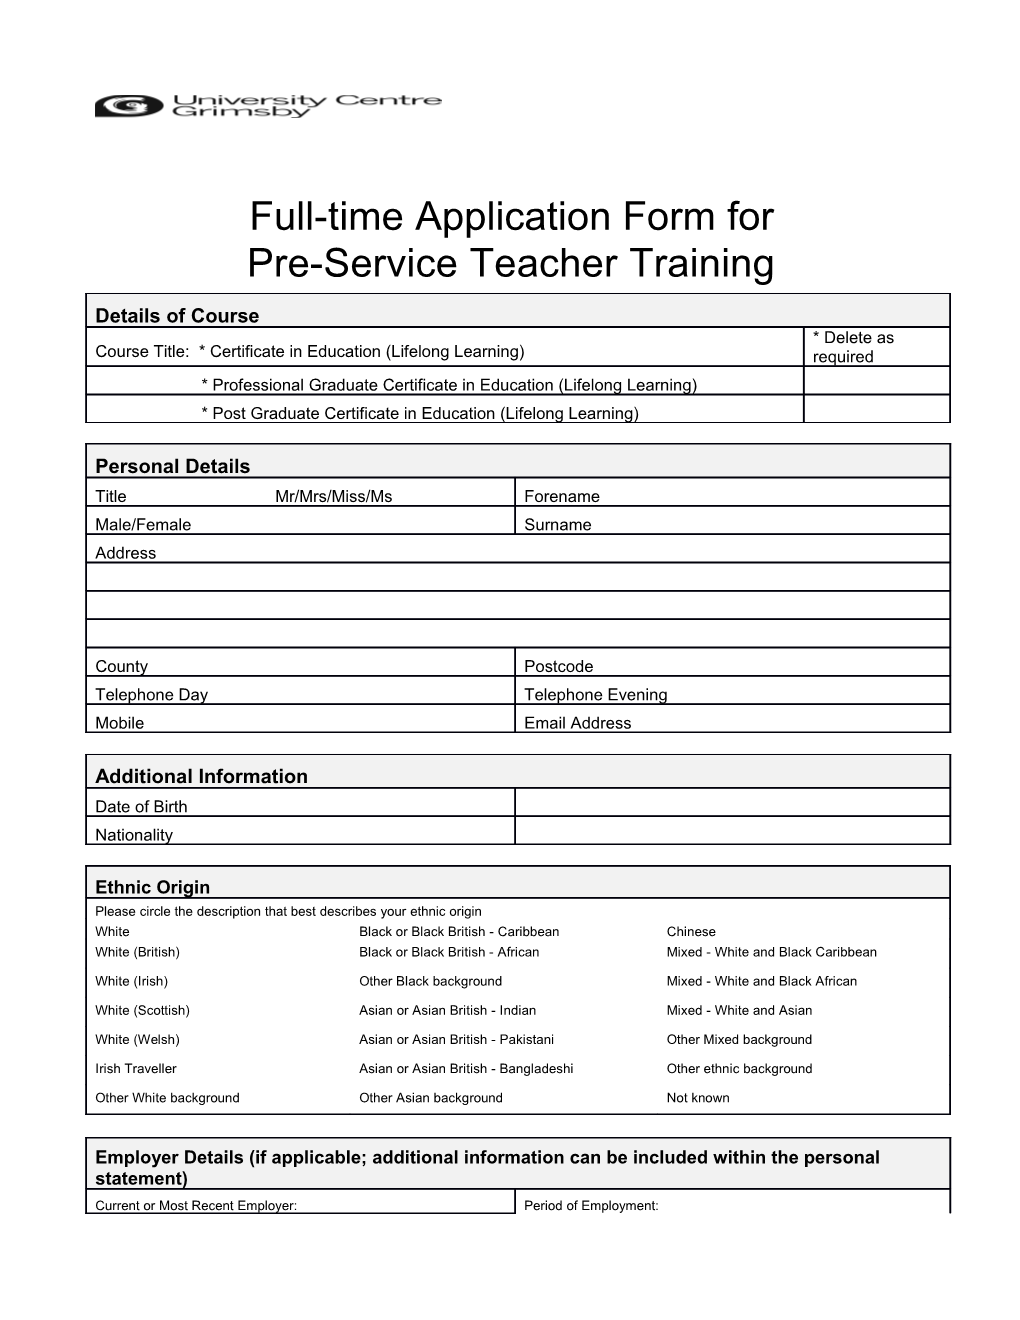 New PT Application Form 2009